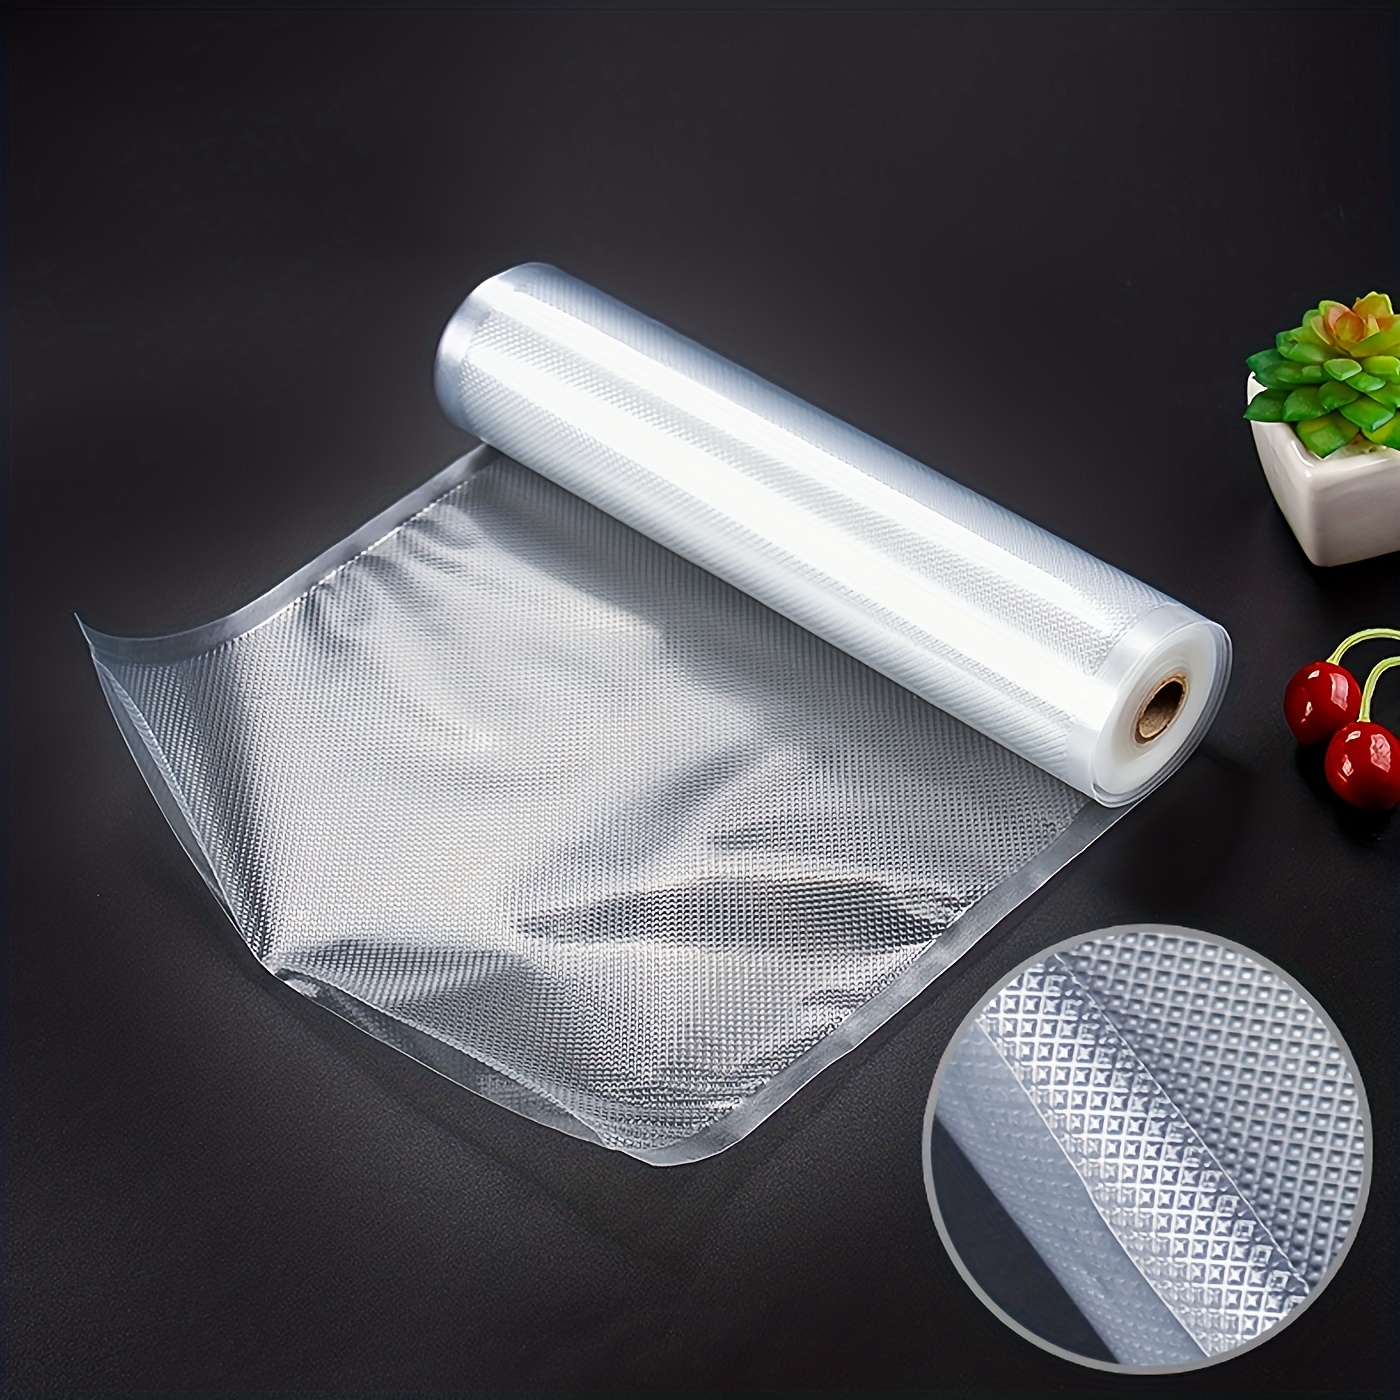 FoodSaver Vacuum Packaging Rolls, 4 pk.